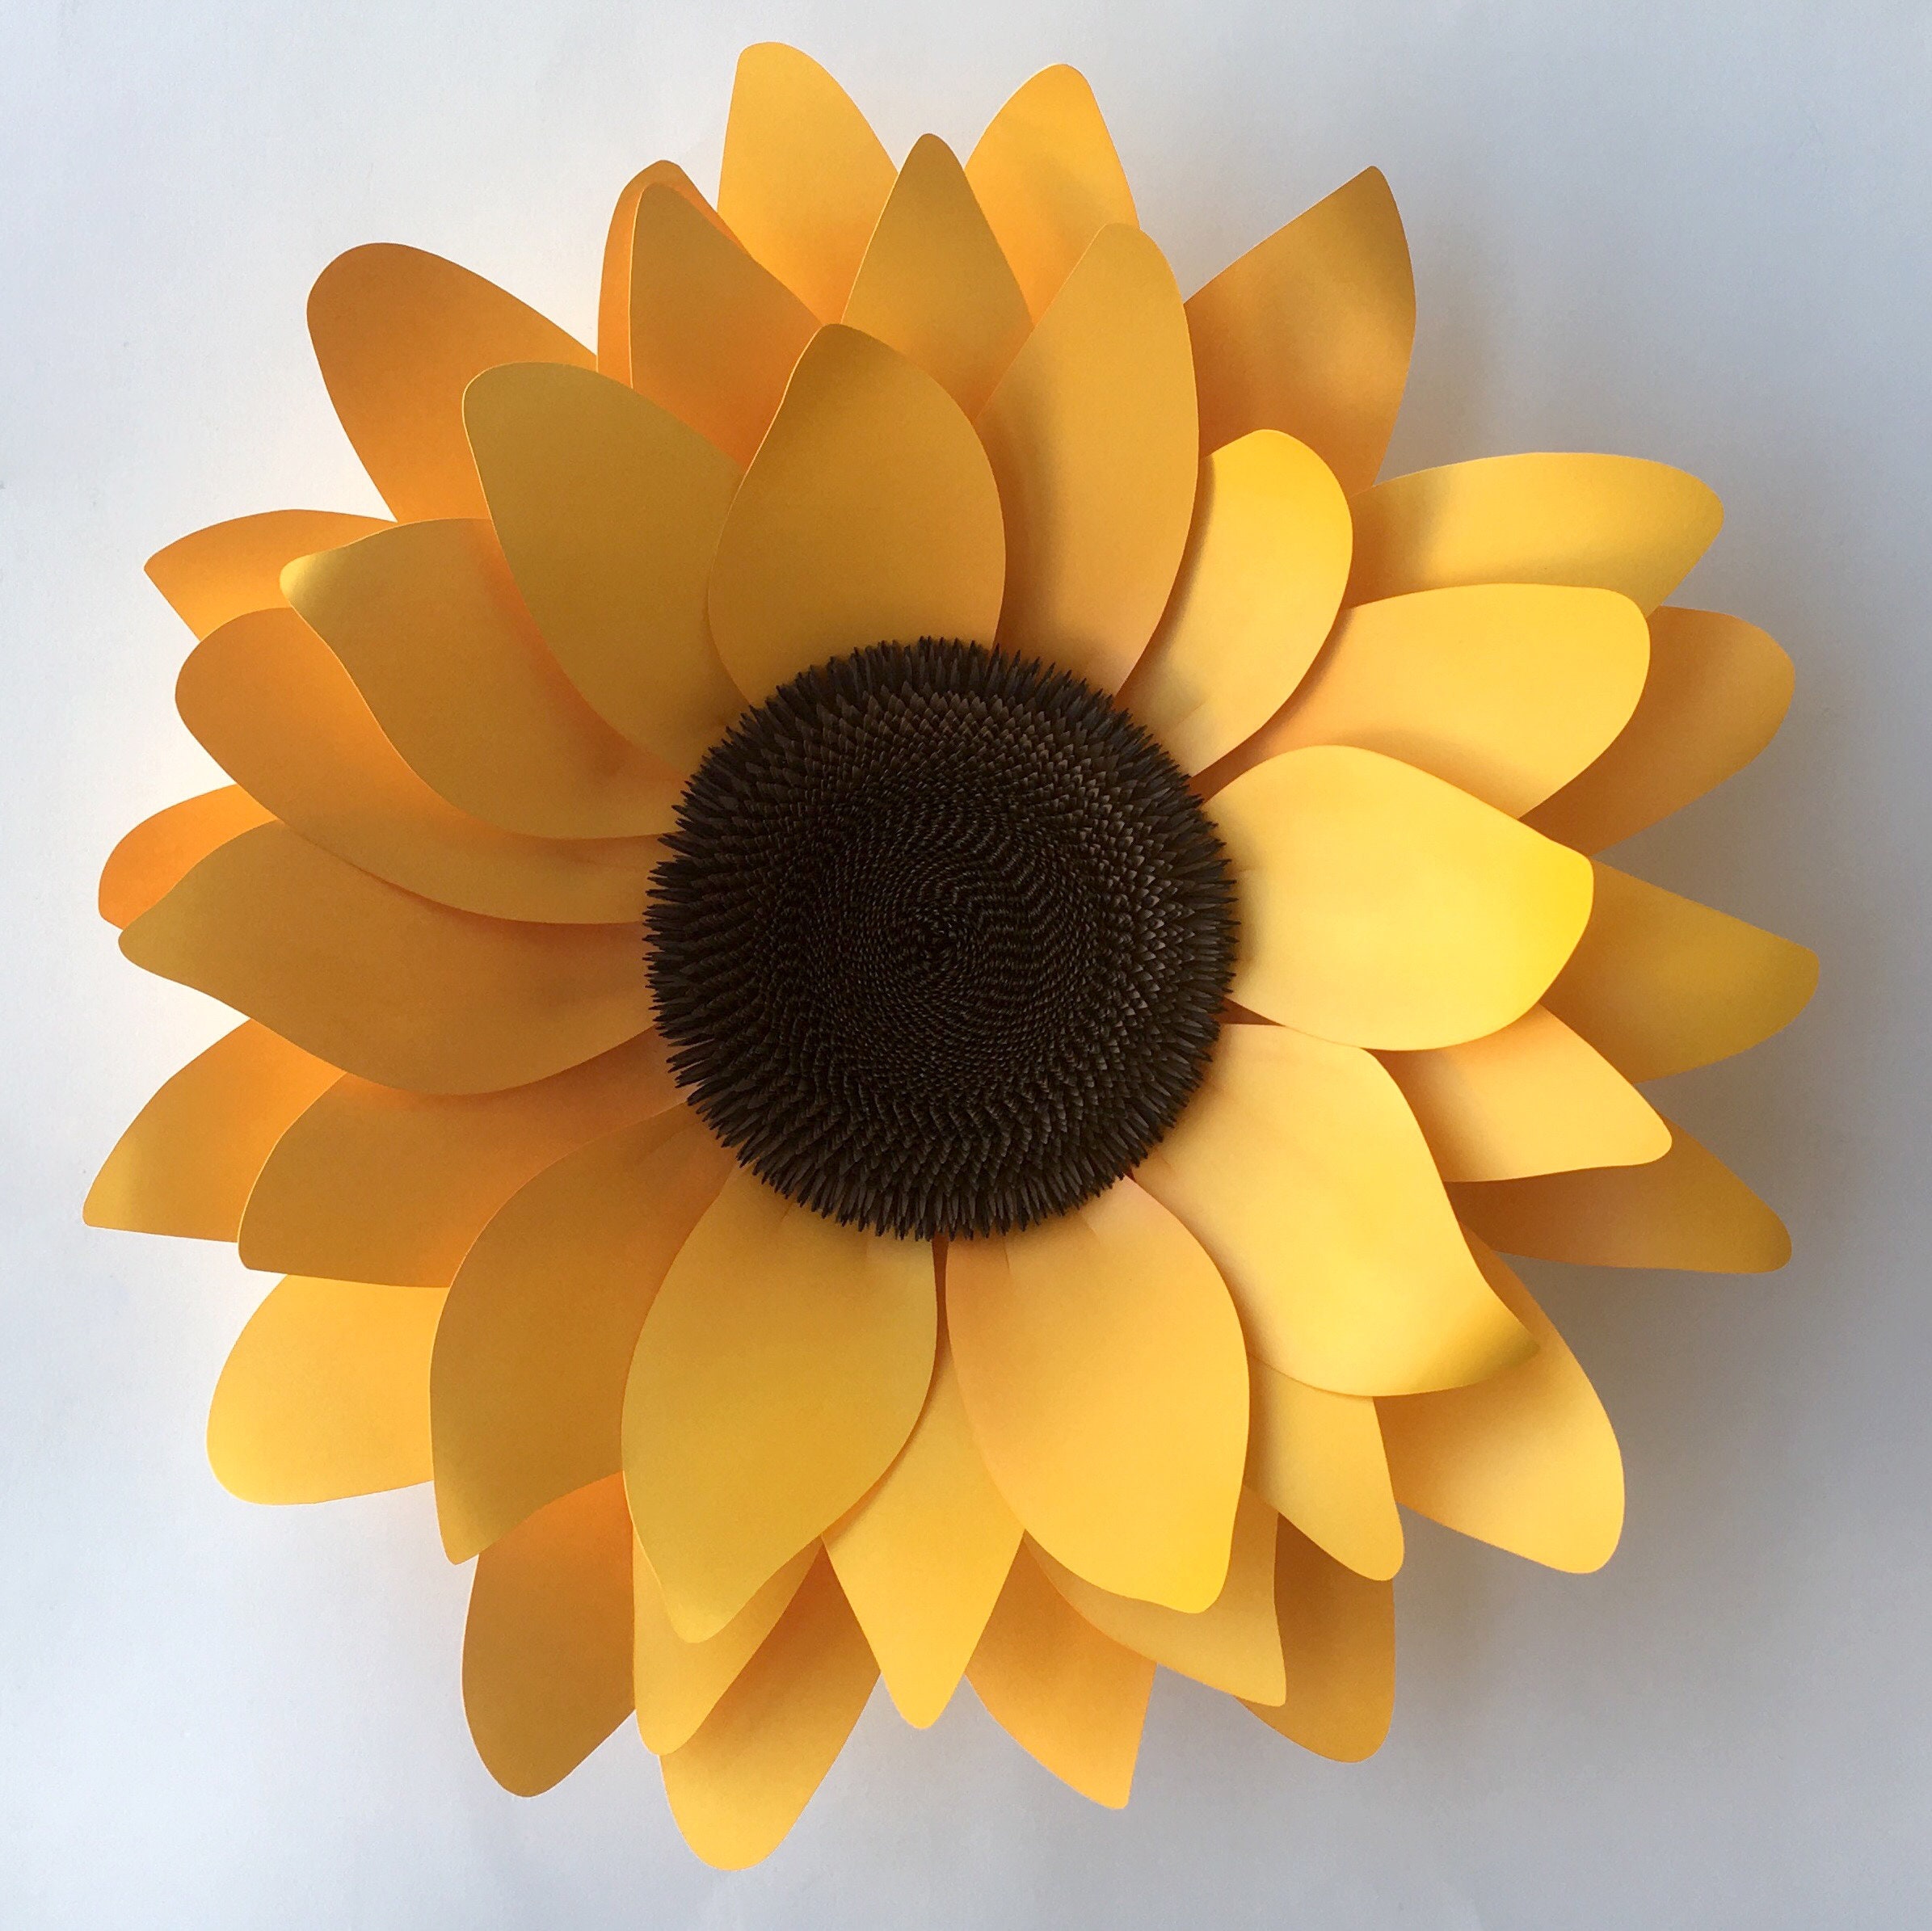 Sunflower Cut Out Template